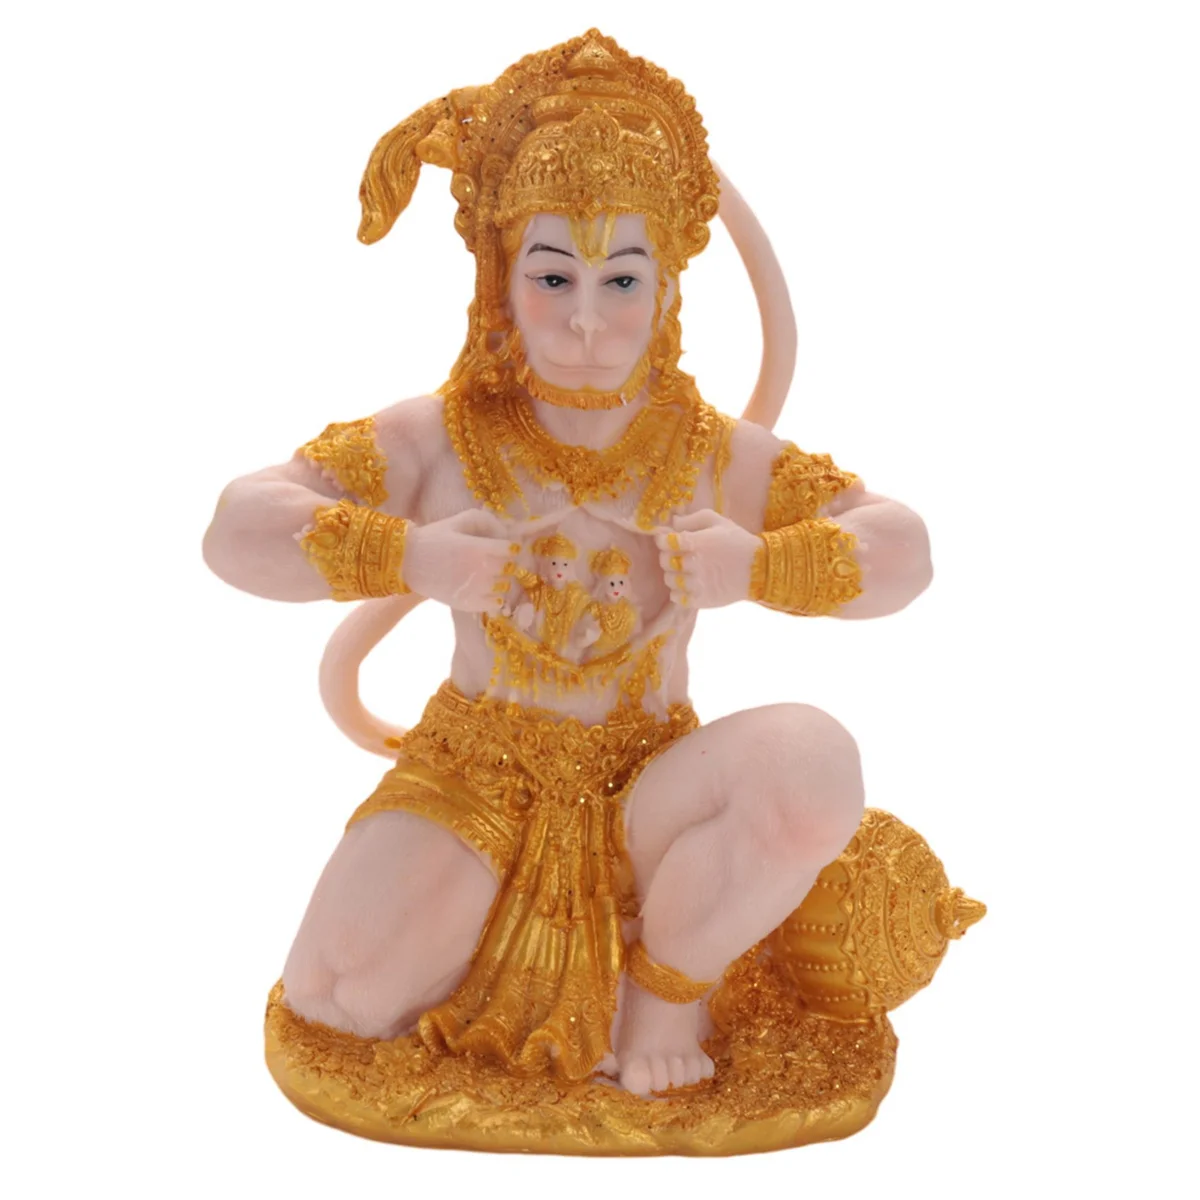 

Gold Hanuman Statue Indian Lord Sculpture India Figurine Collection Idol Murti Sculpture for Decor Ornament